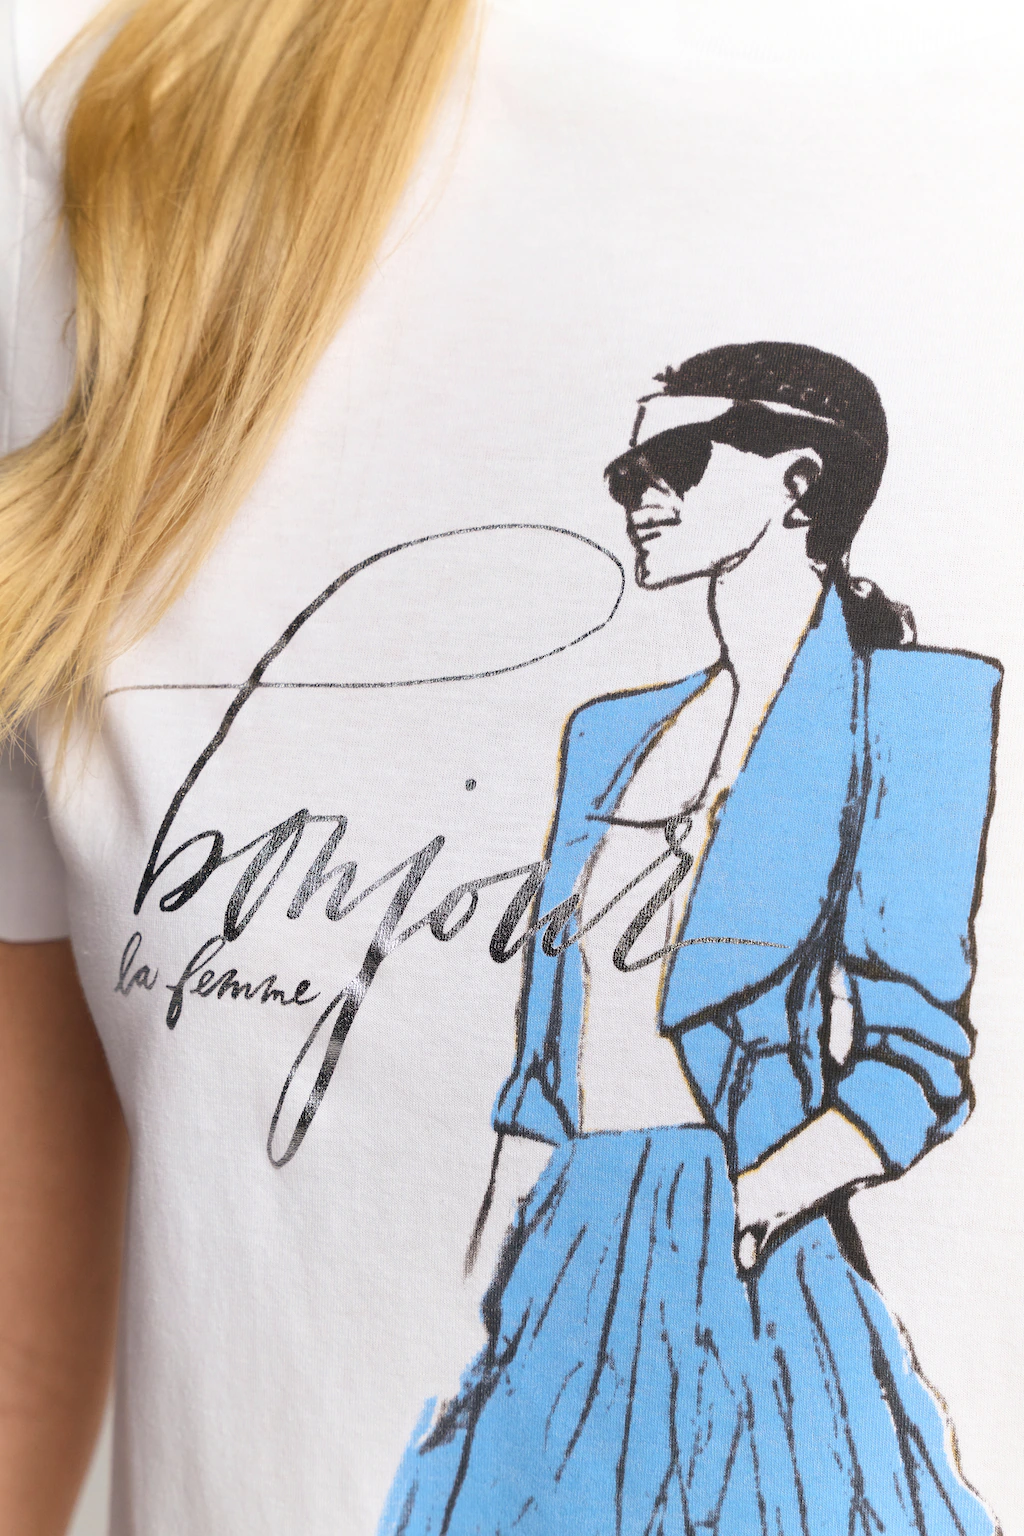 Rich & Royal T-Shirt, Easy fit T-Shirt "Bonjour" with woman print günstig online kaufen